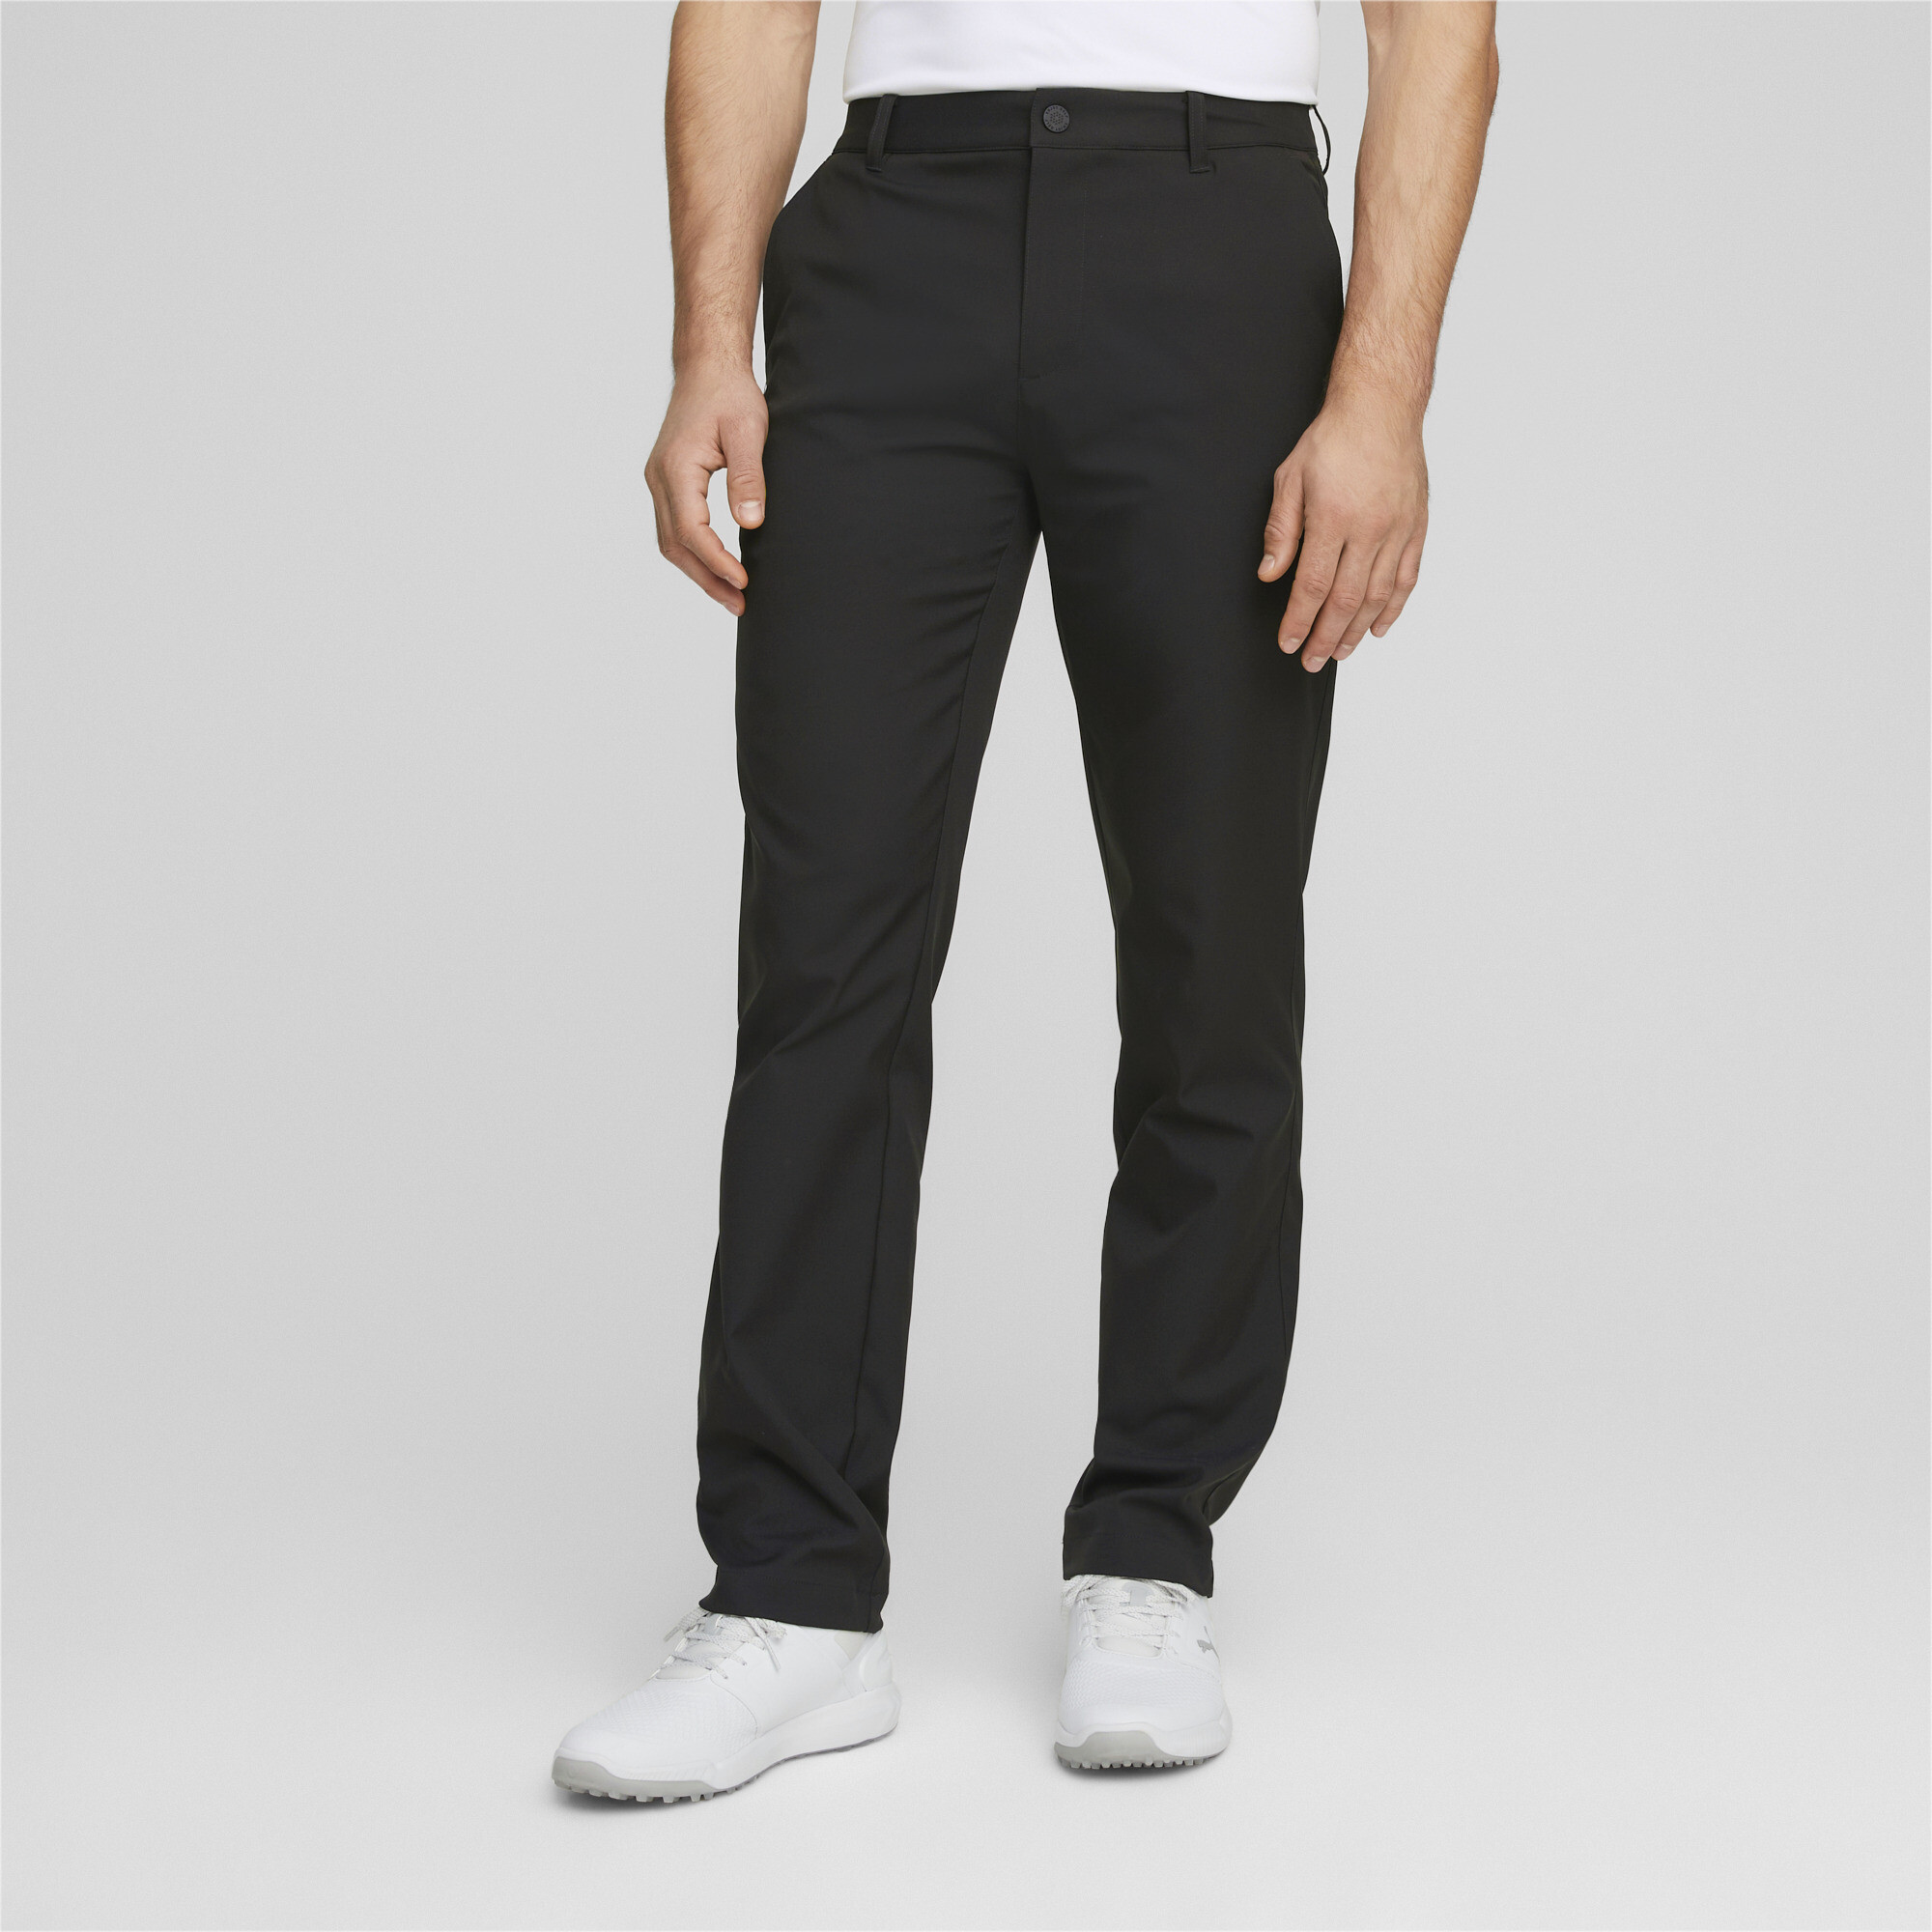 Men's Puma Dealer Golf Pants, Black, Size 40/34, Clothing